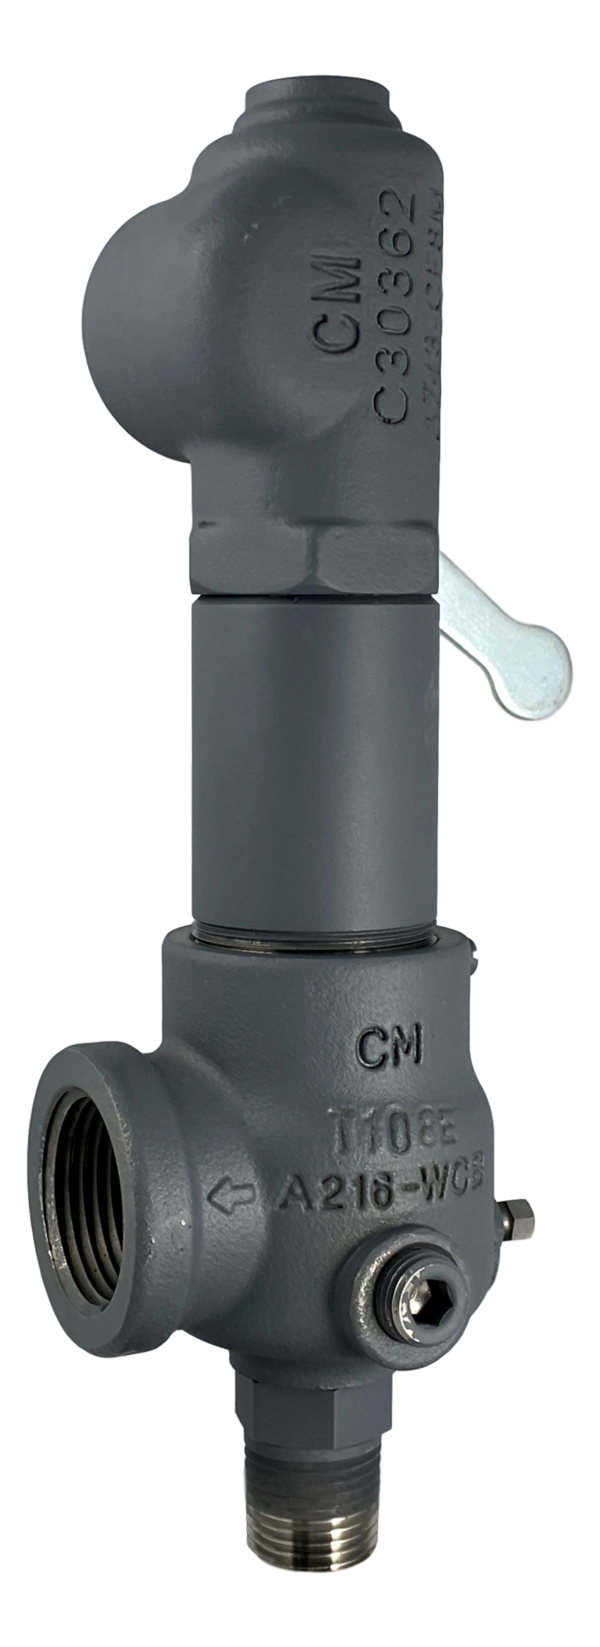 Kunkle 910BHGM06 - 1.5" x 2.5" - Packed Lever - Buy Kunkle valves online